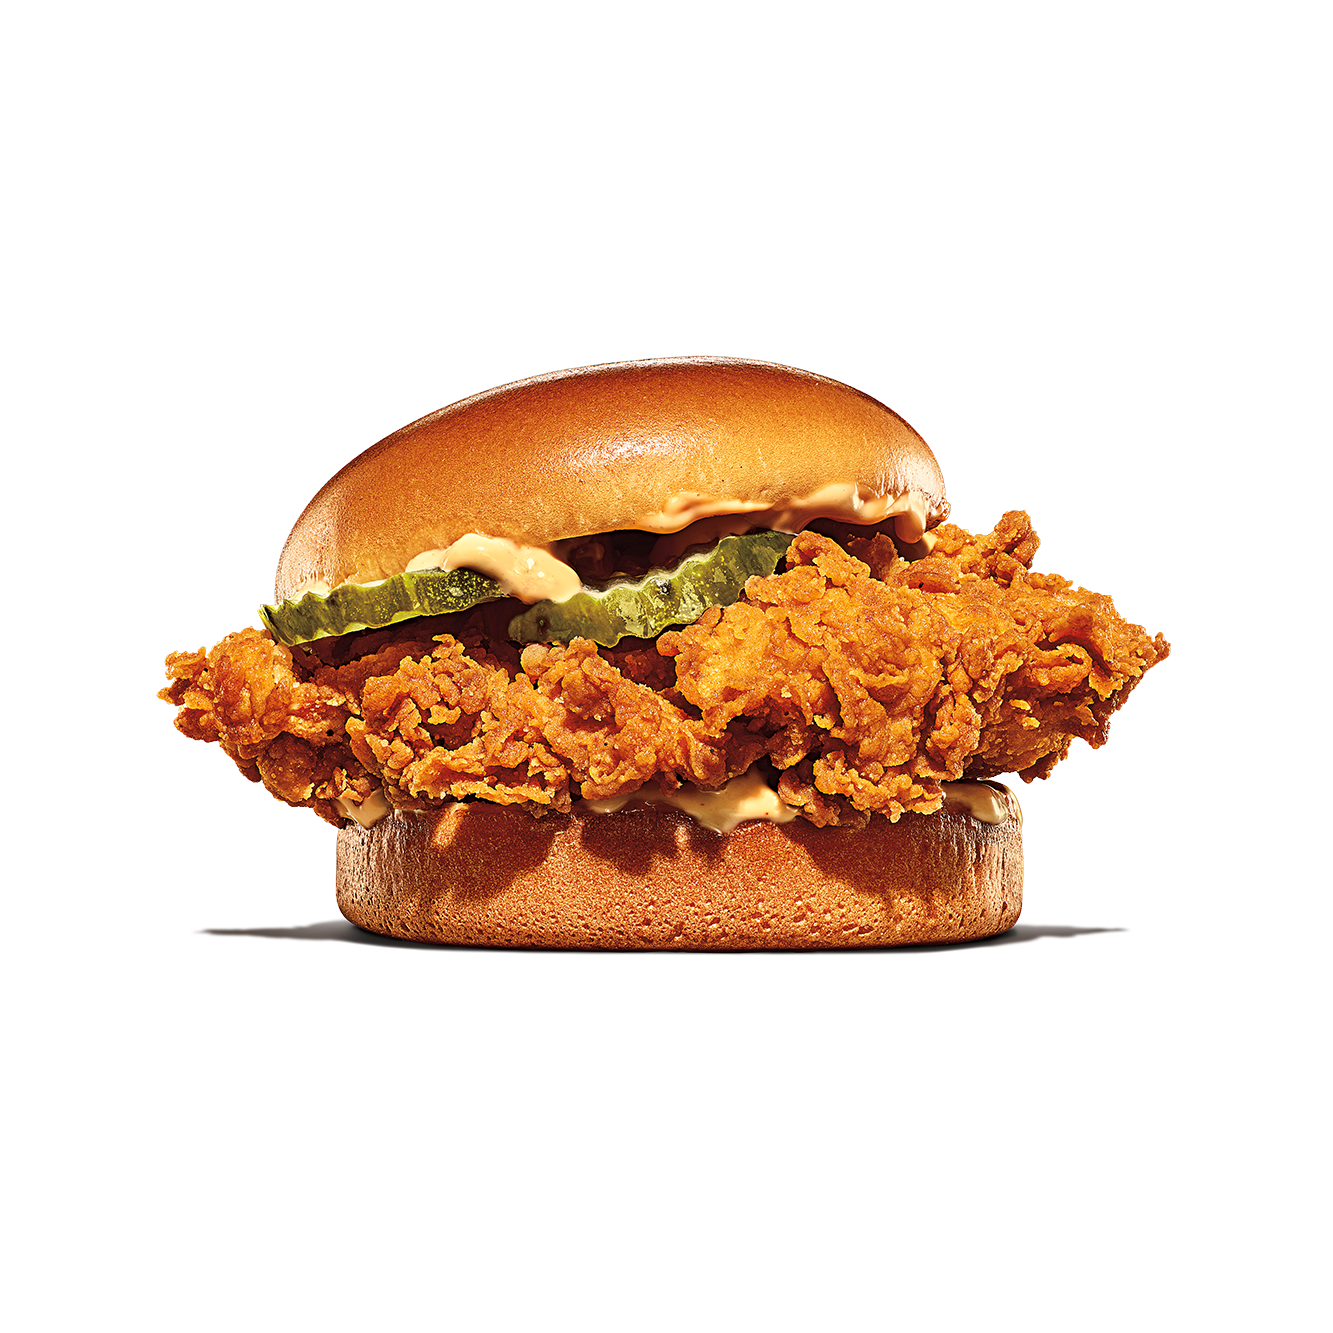 Burger King Original Hand-Breaded Crispy Chicken Sandwich Nutrition Facts